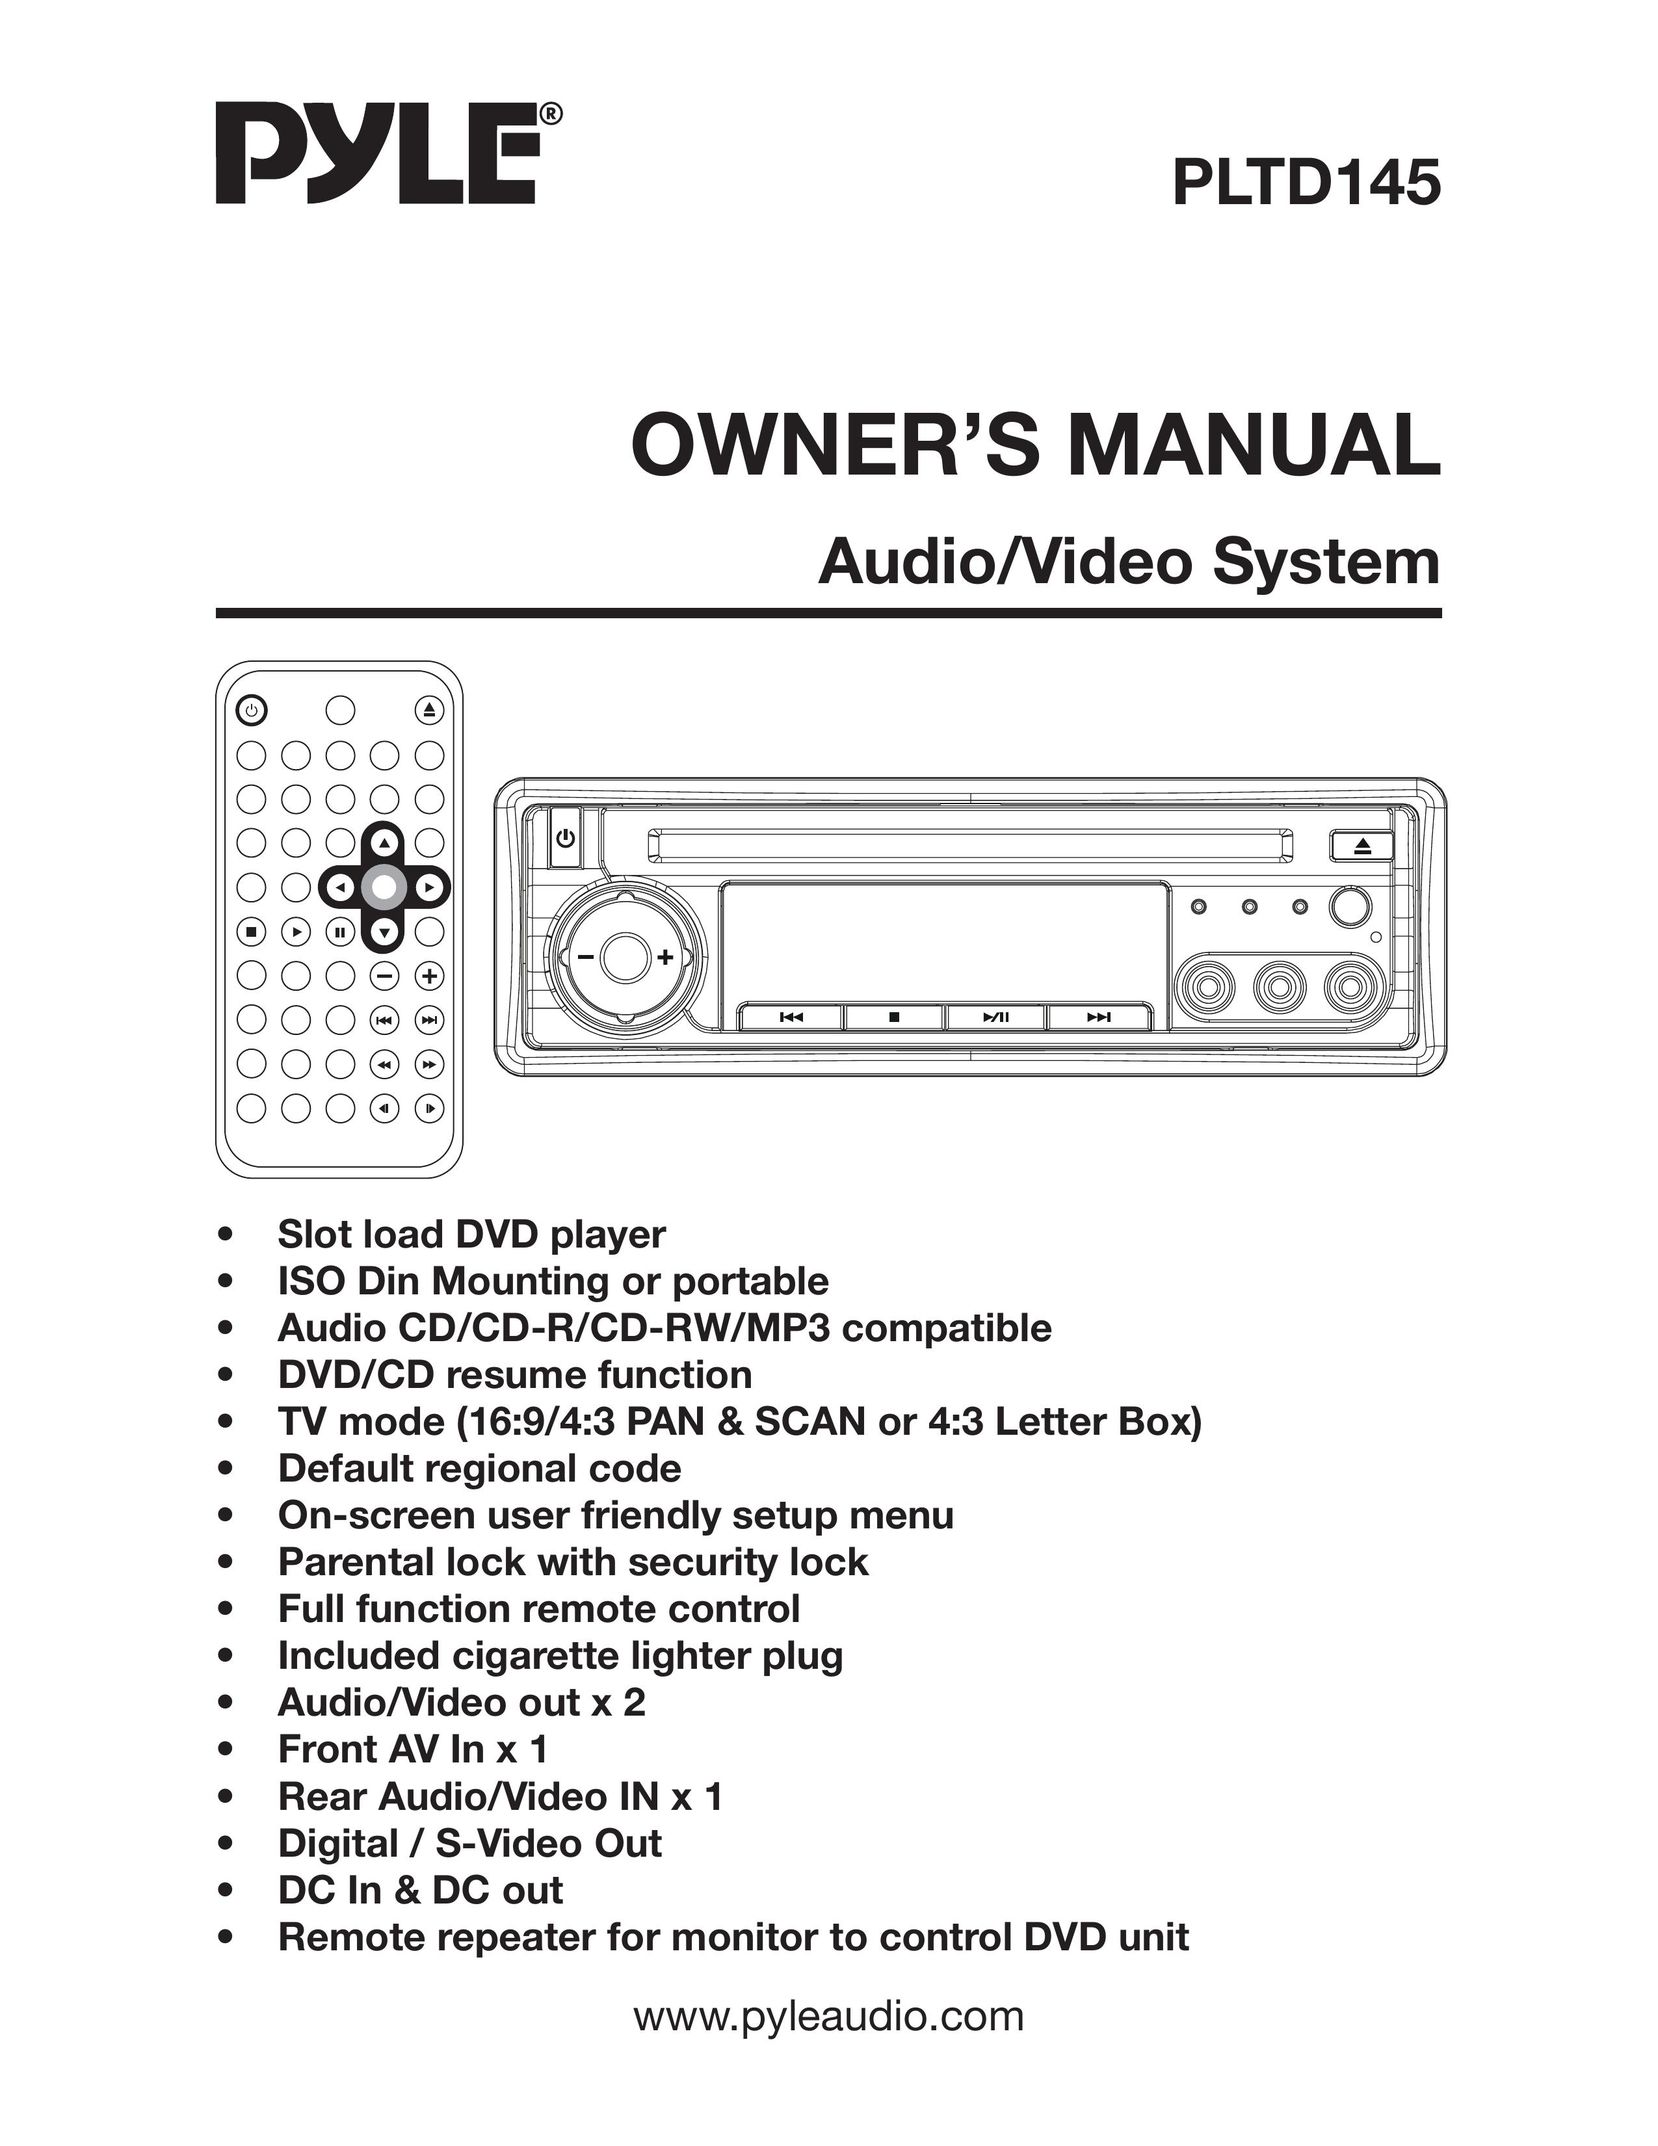 Radio Shack PLTD145 Stereo Receiver User Manual